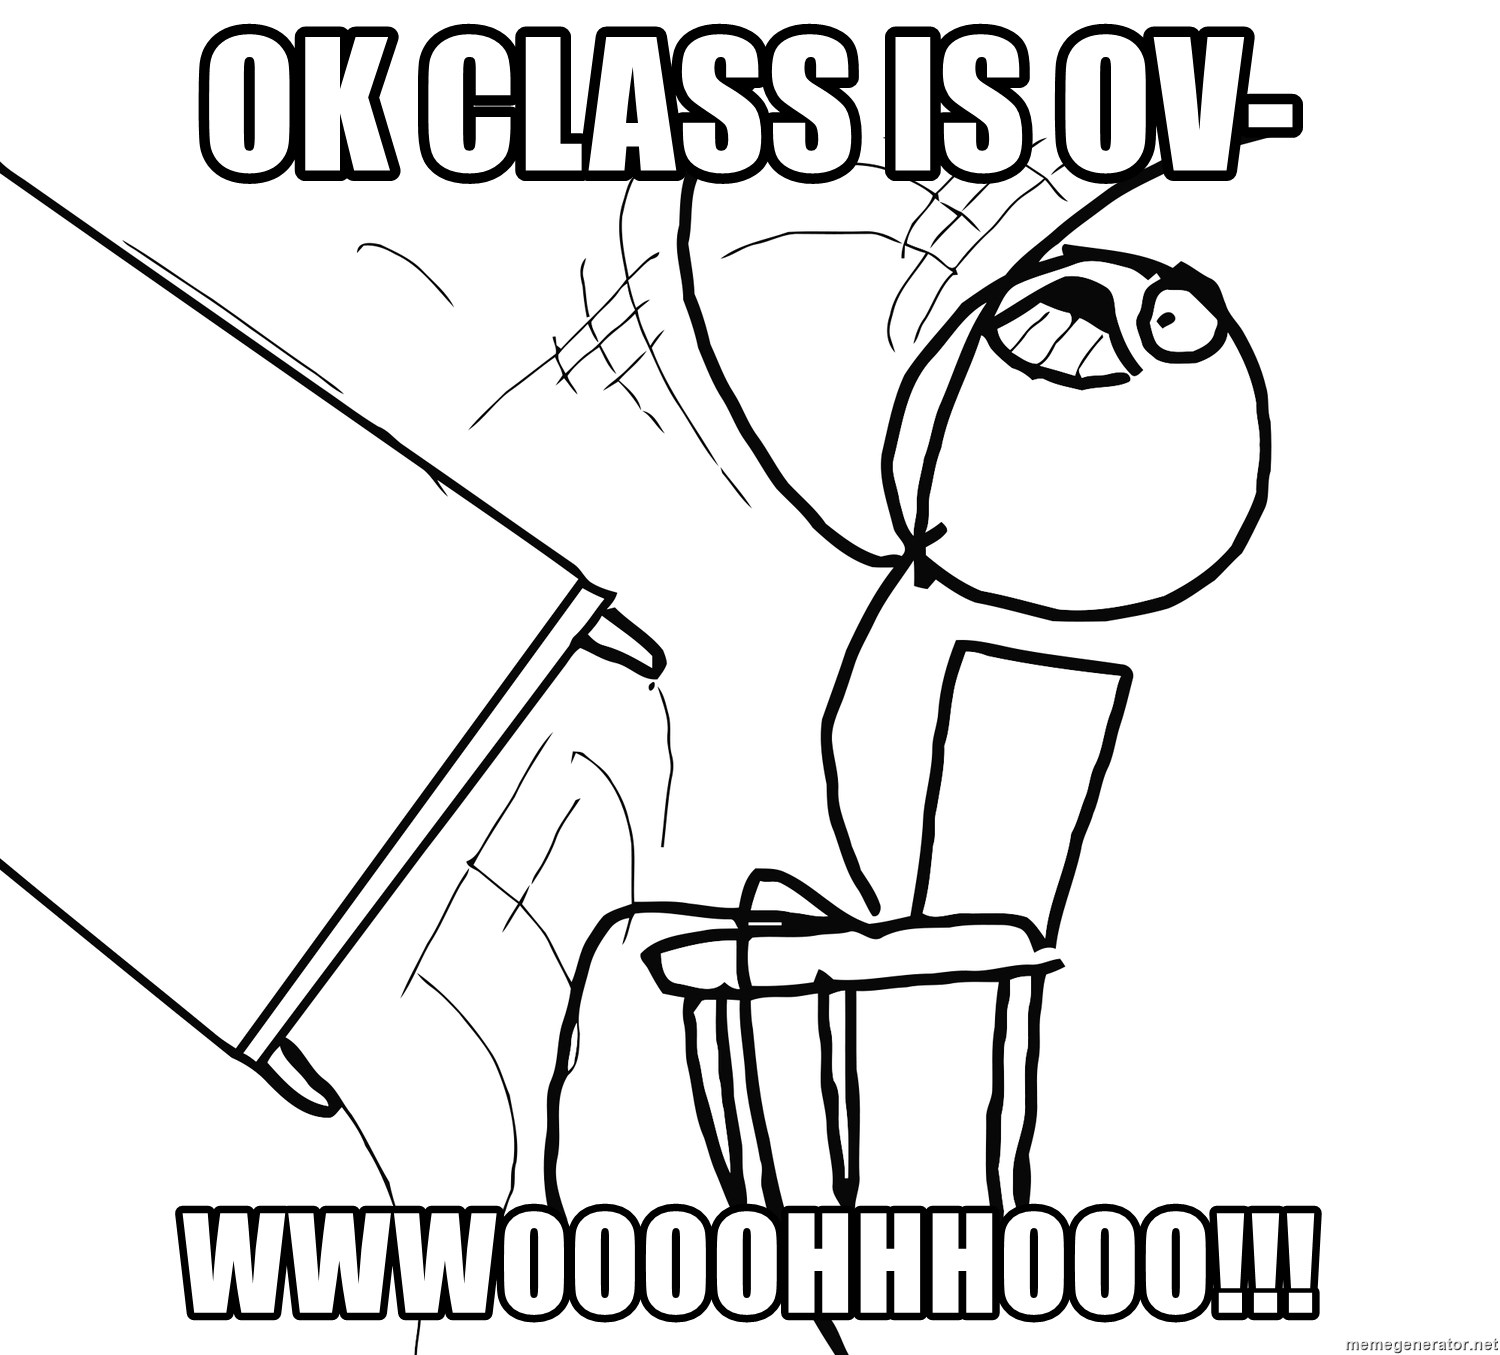 Desk Flip Rage Guy - OK CLASS IS OV- WWWOOOOHHHOOO!!!